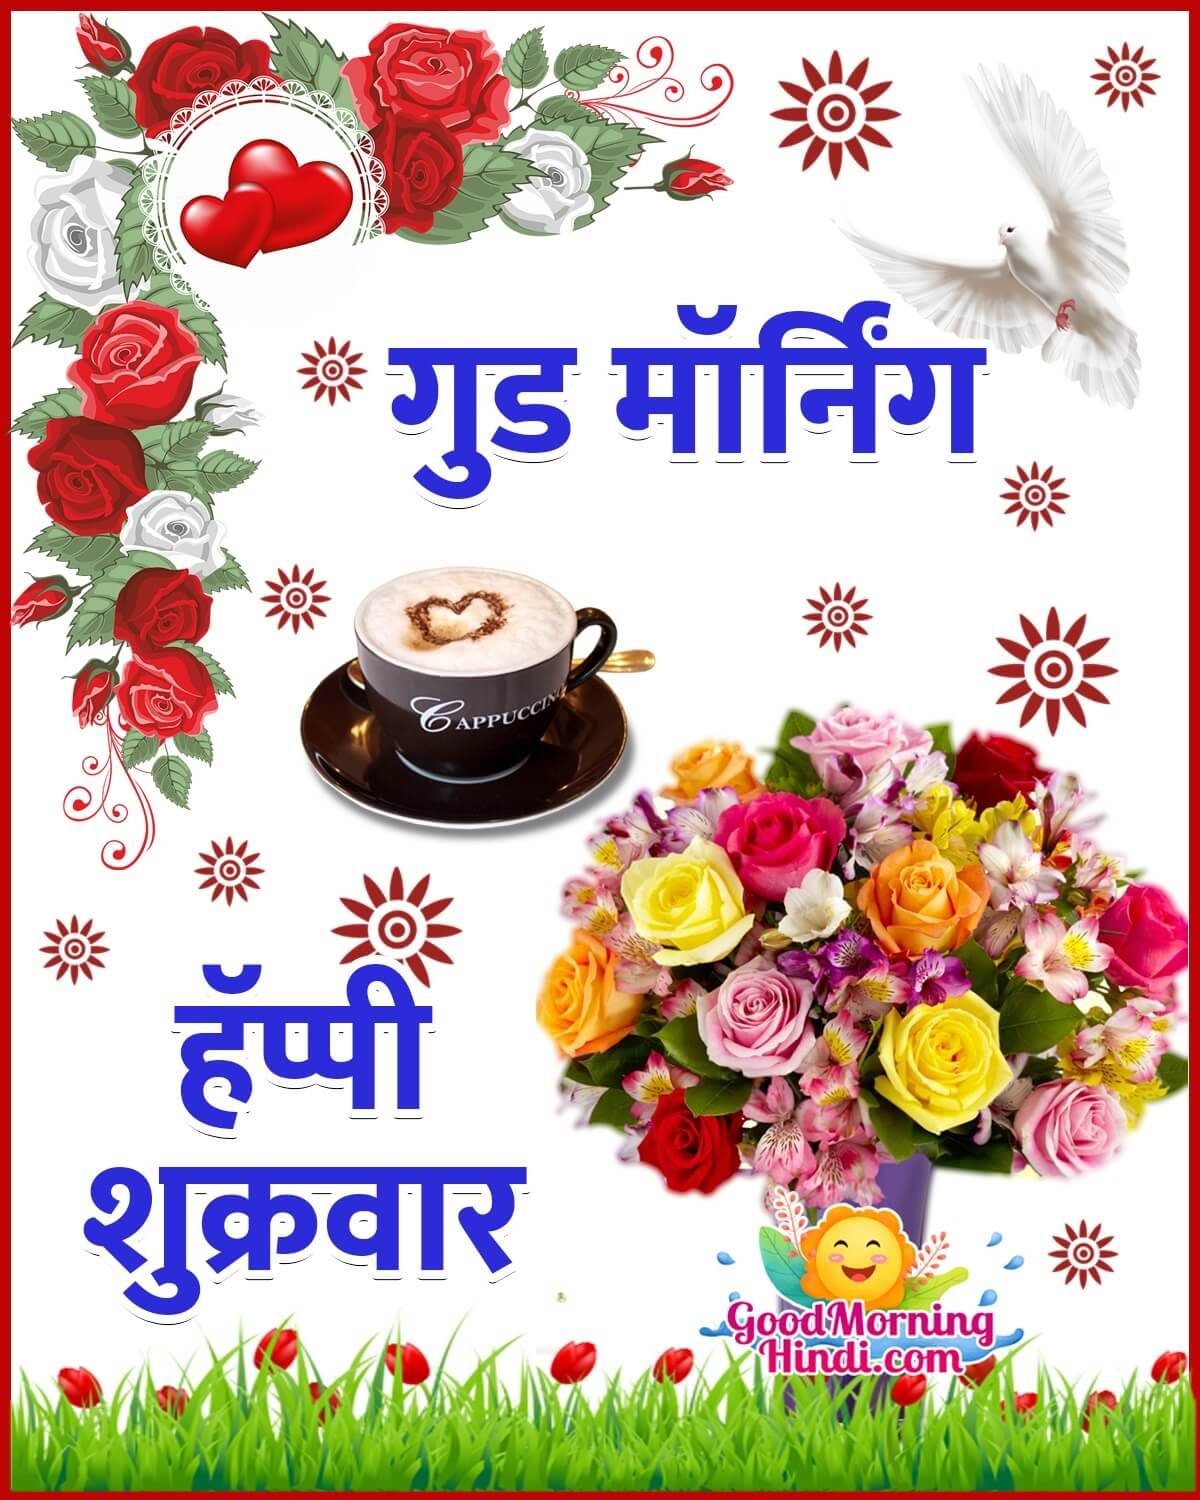 Good Morning Happy Shukrawar Image